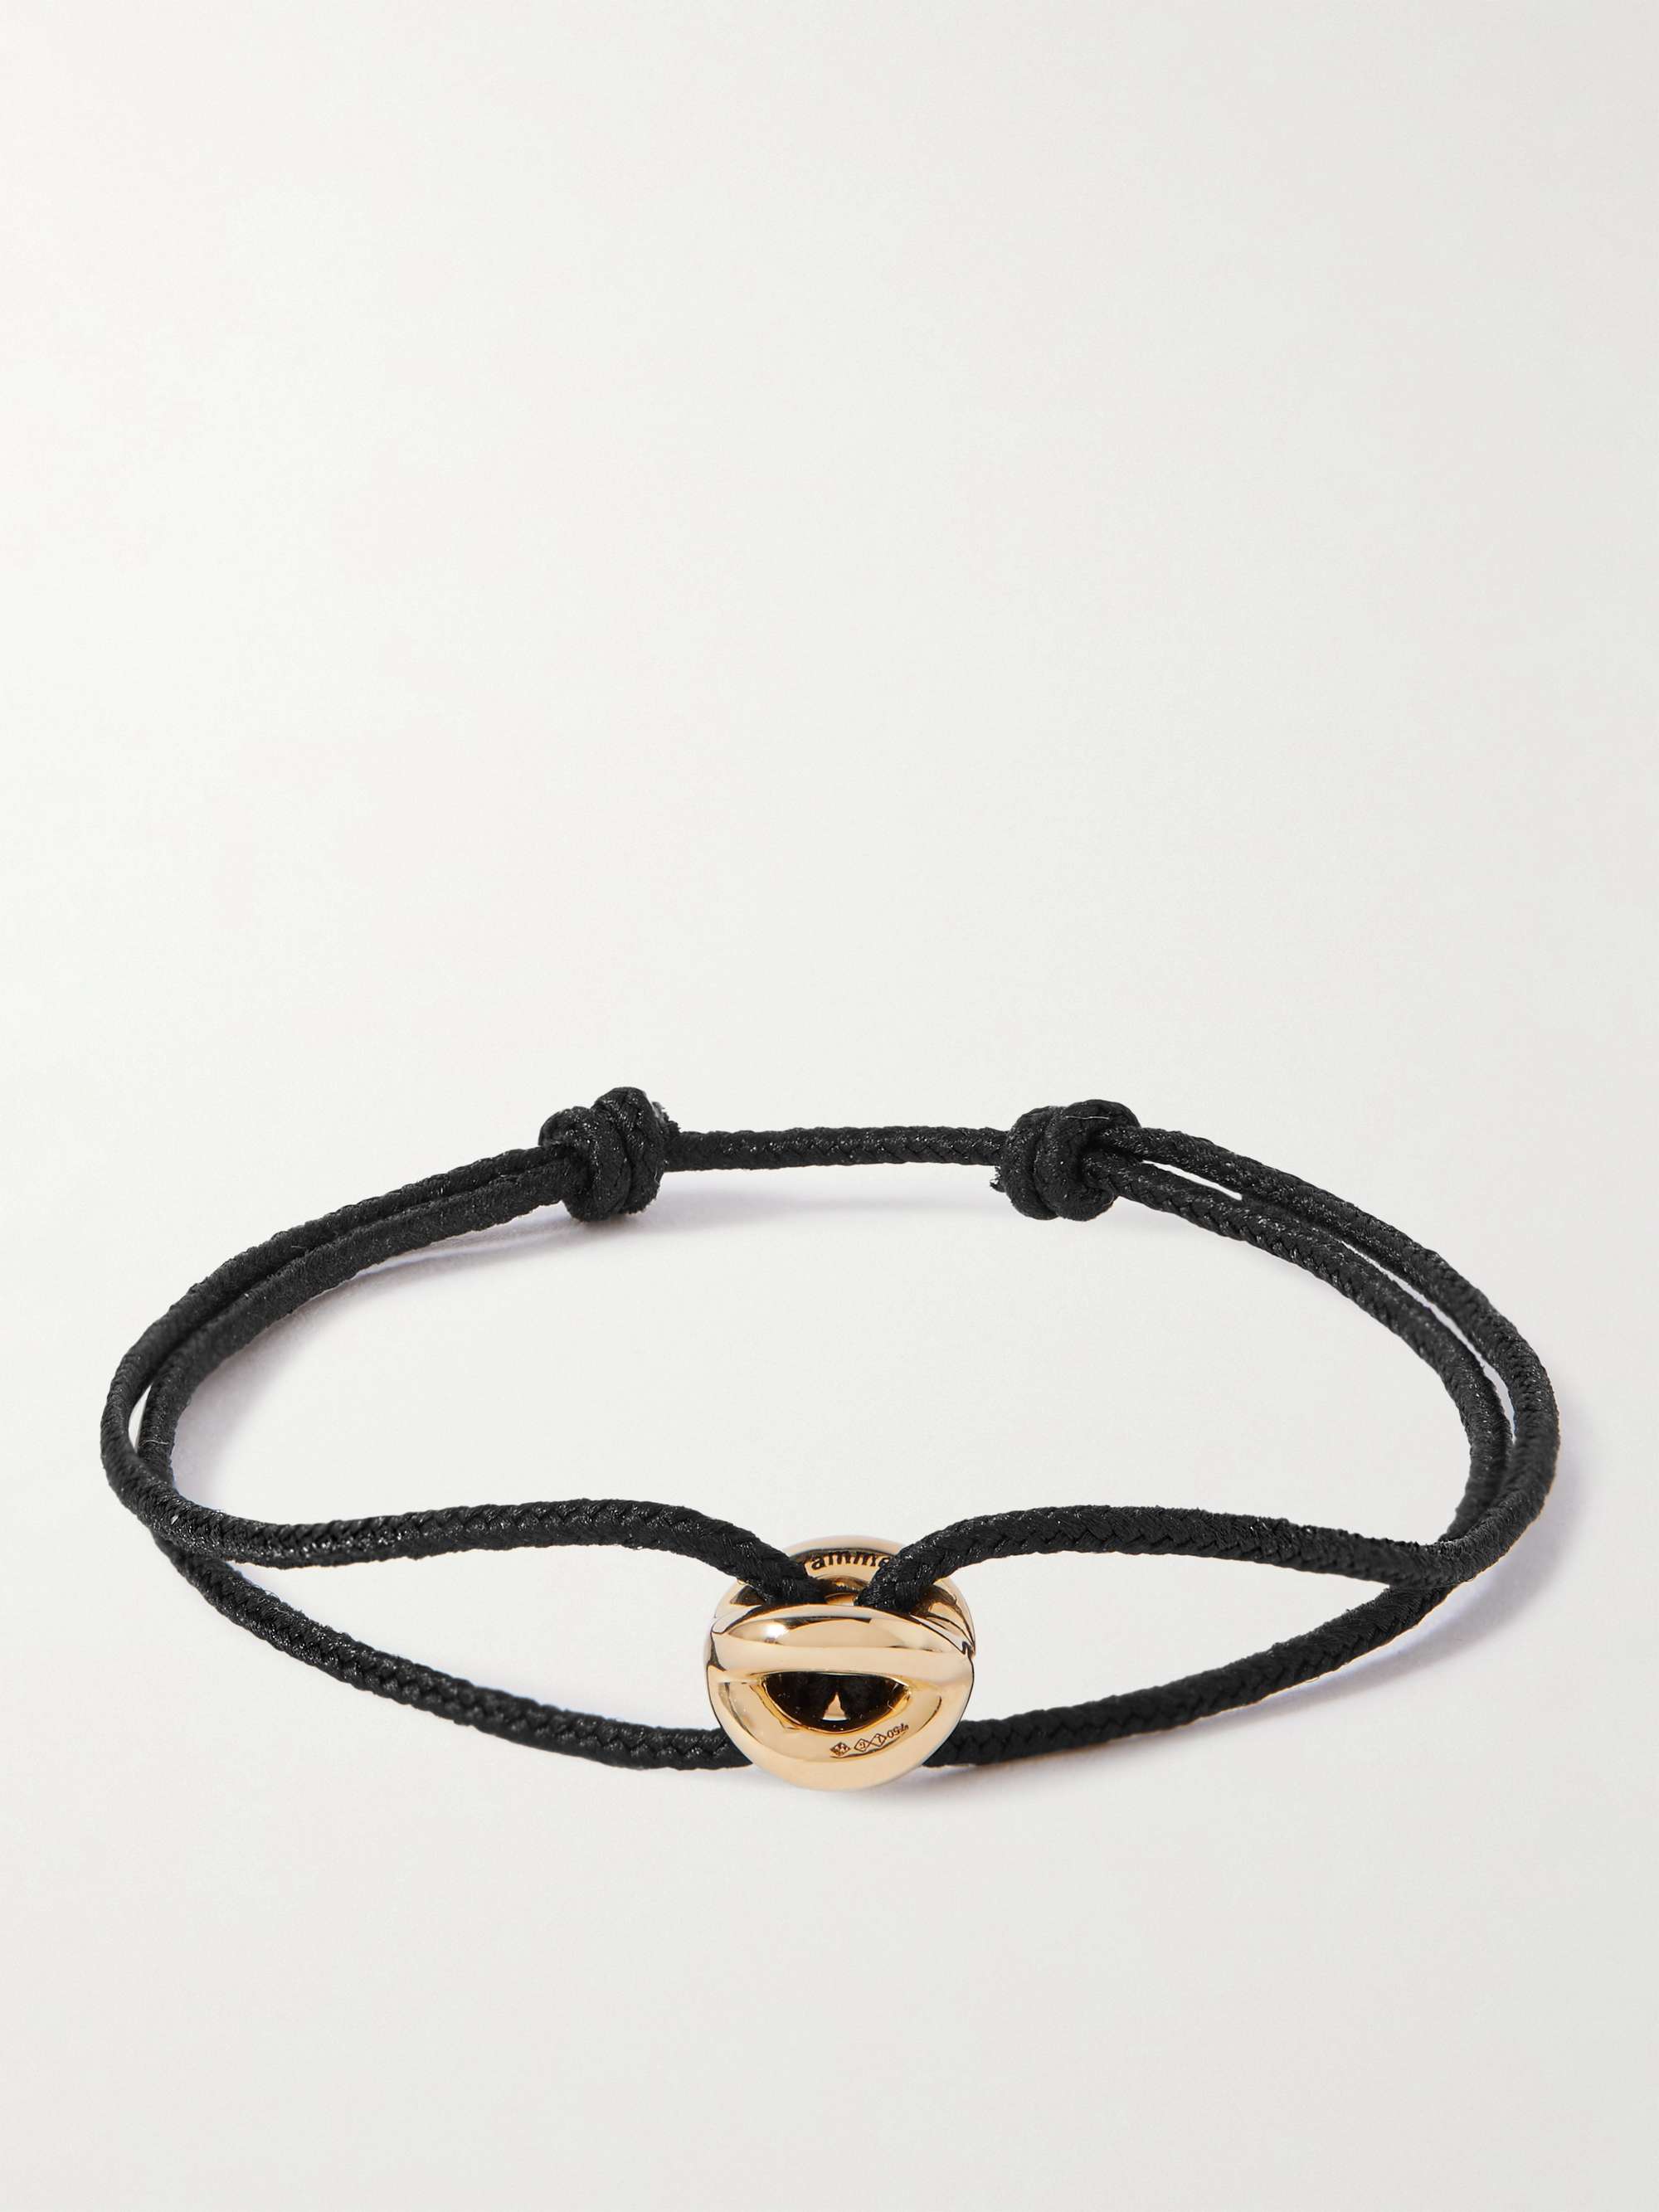 Authentic Cartier Bracelet baby love string 4P Silk #583 | eBay